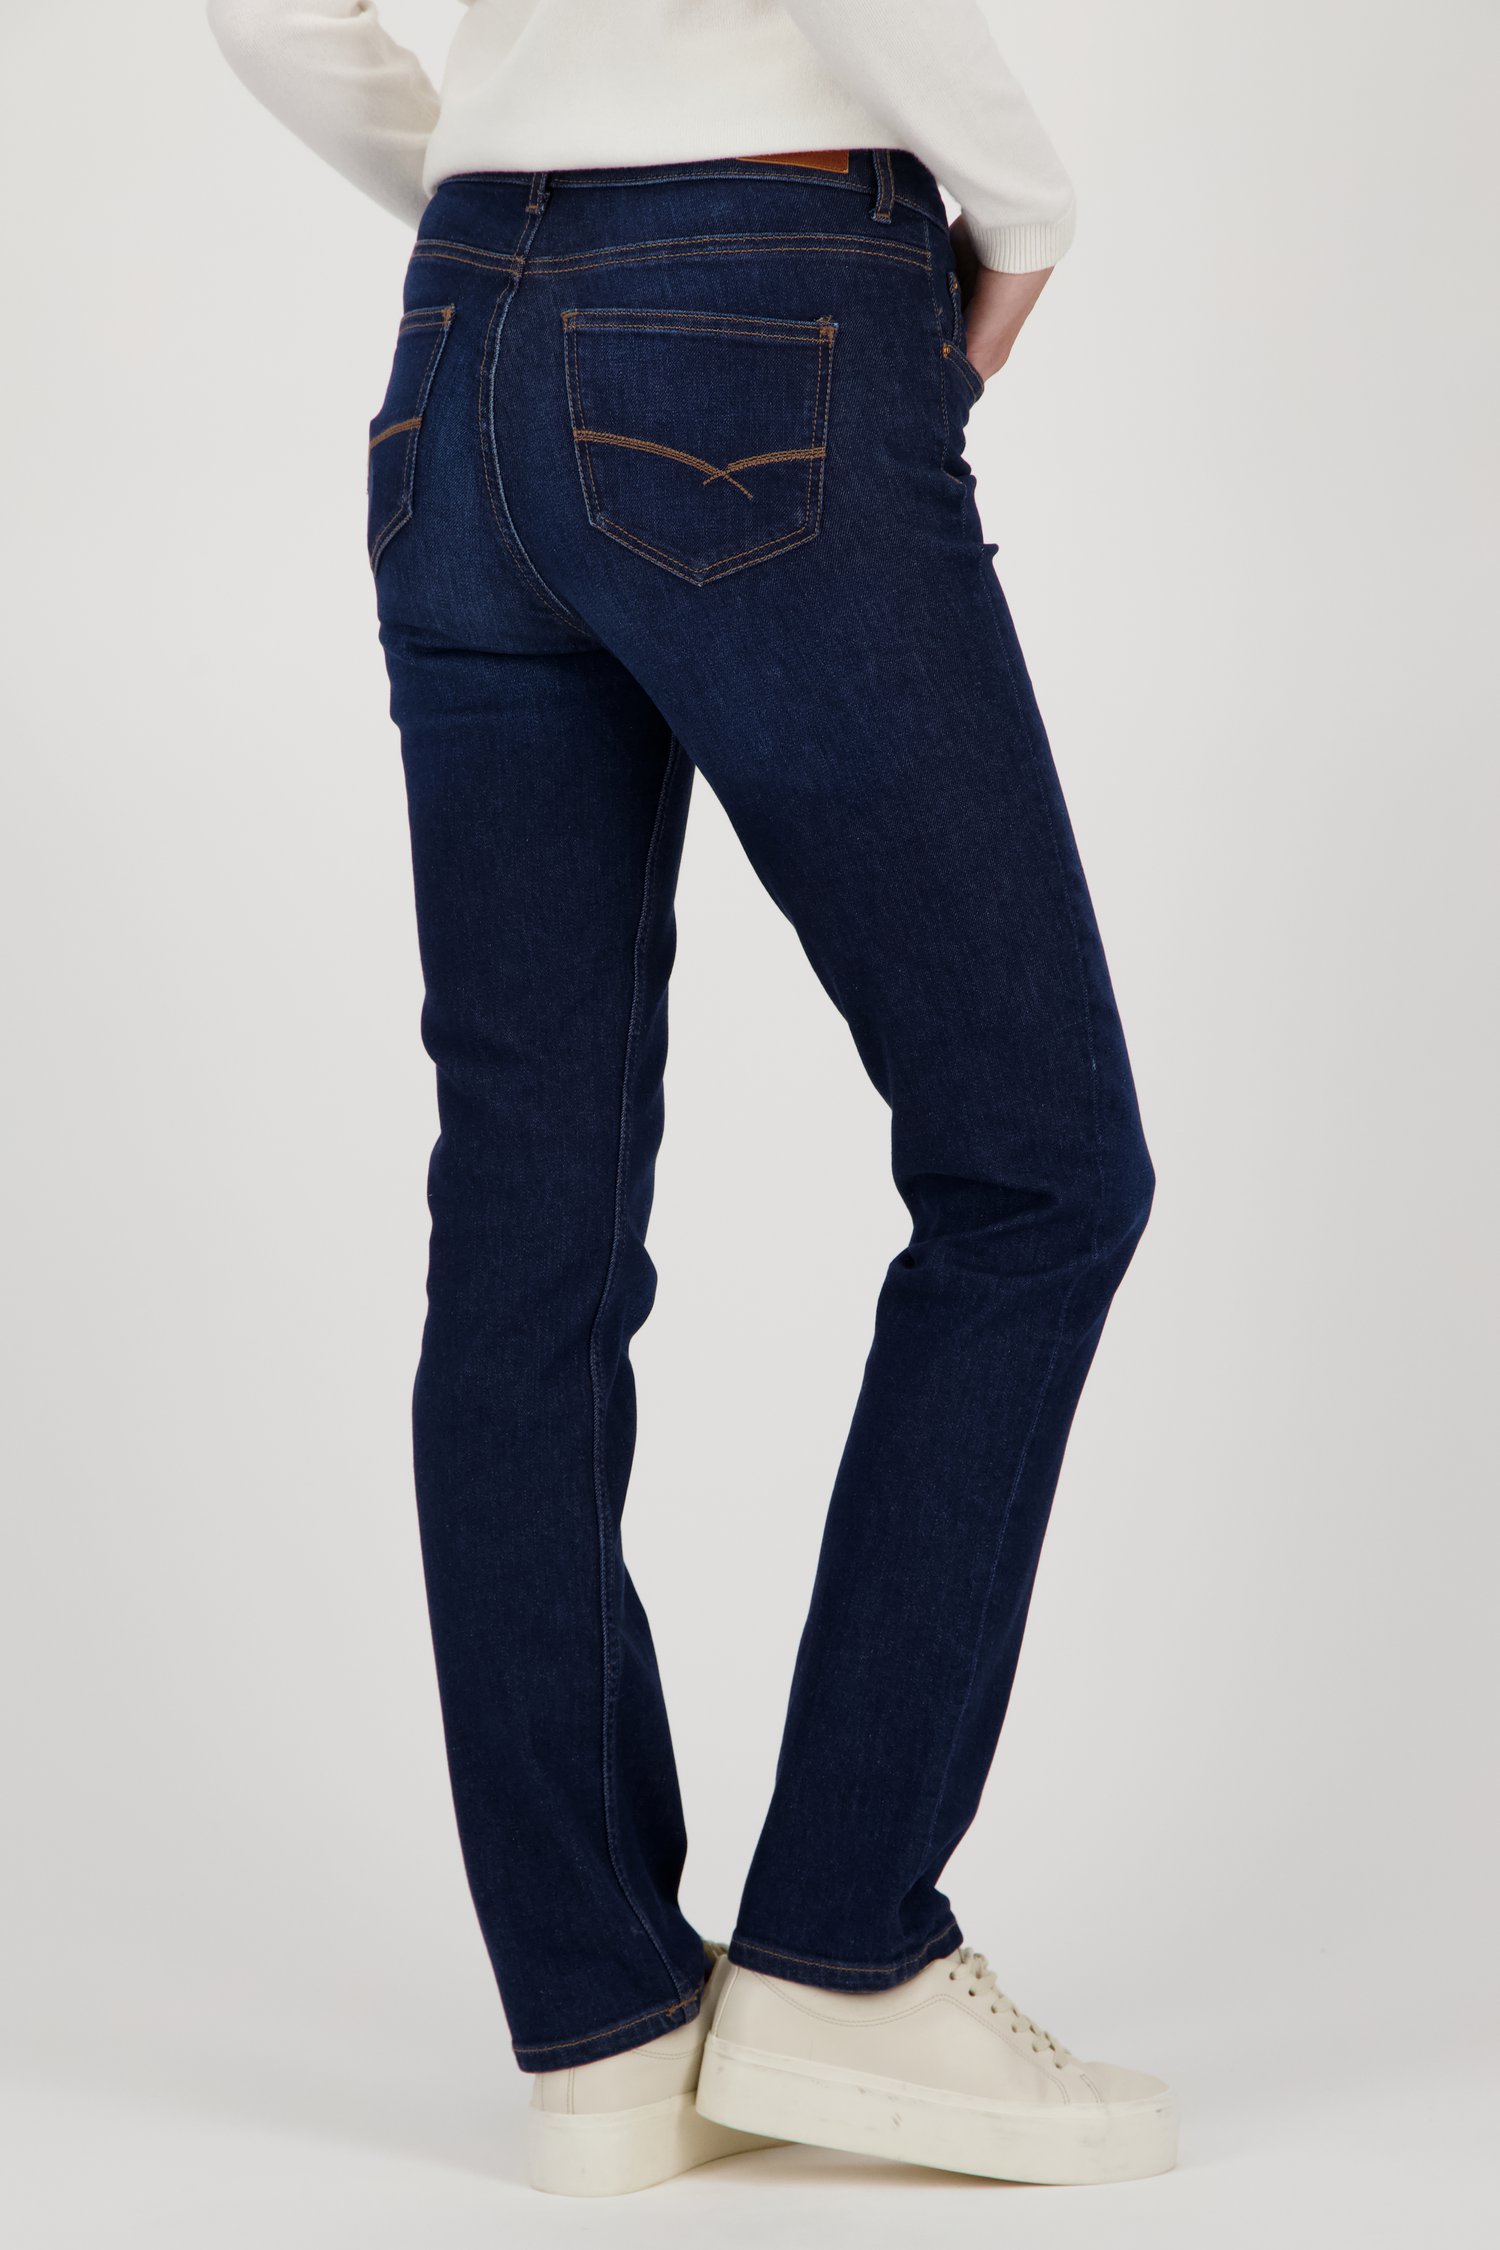 Donkerblauwe jeans - Tammy - Straight fit - L32 van Liberty Island Denim voor Dames